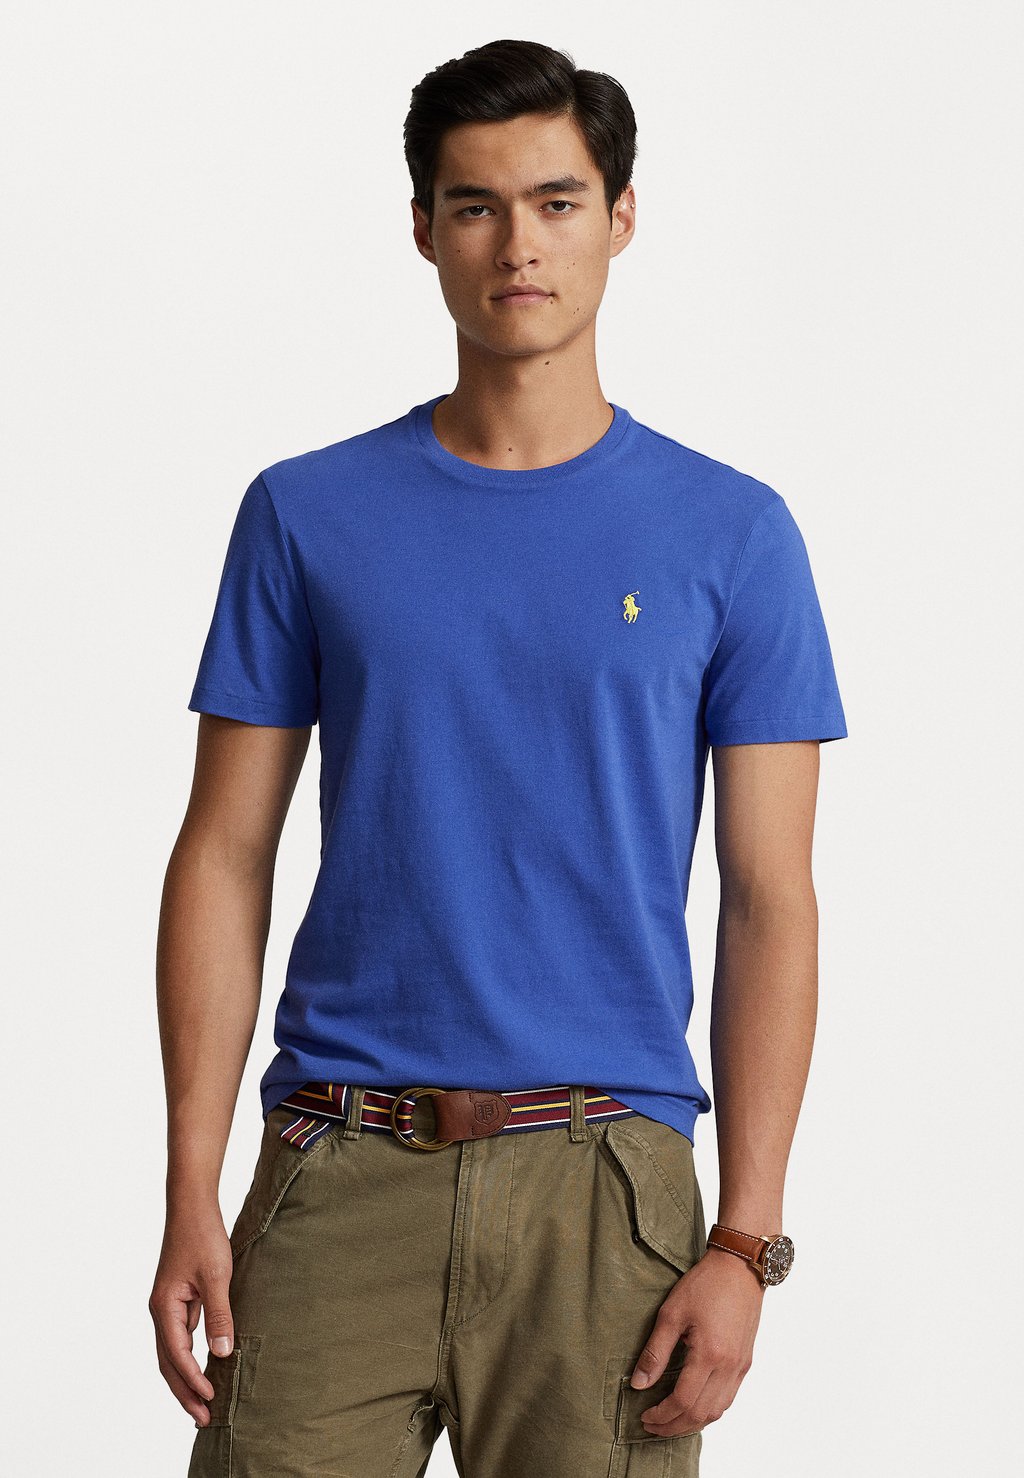 Базовая футболка Polo Ralph Lauren, свобода поло polo ralph lauren custom slim fit mesh polo цвет ralph lauren 2000 red